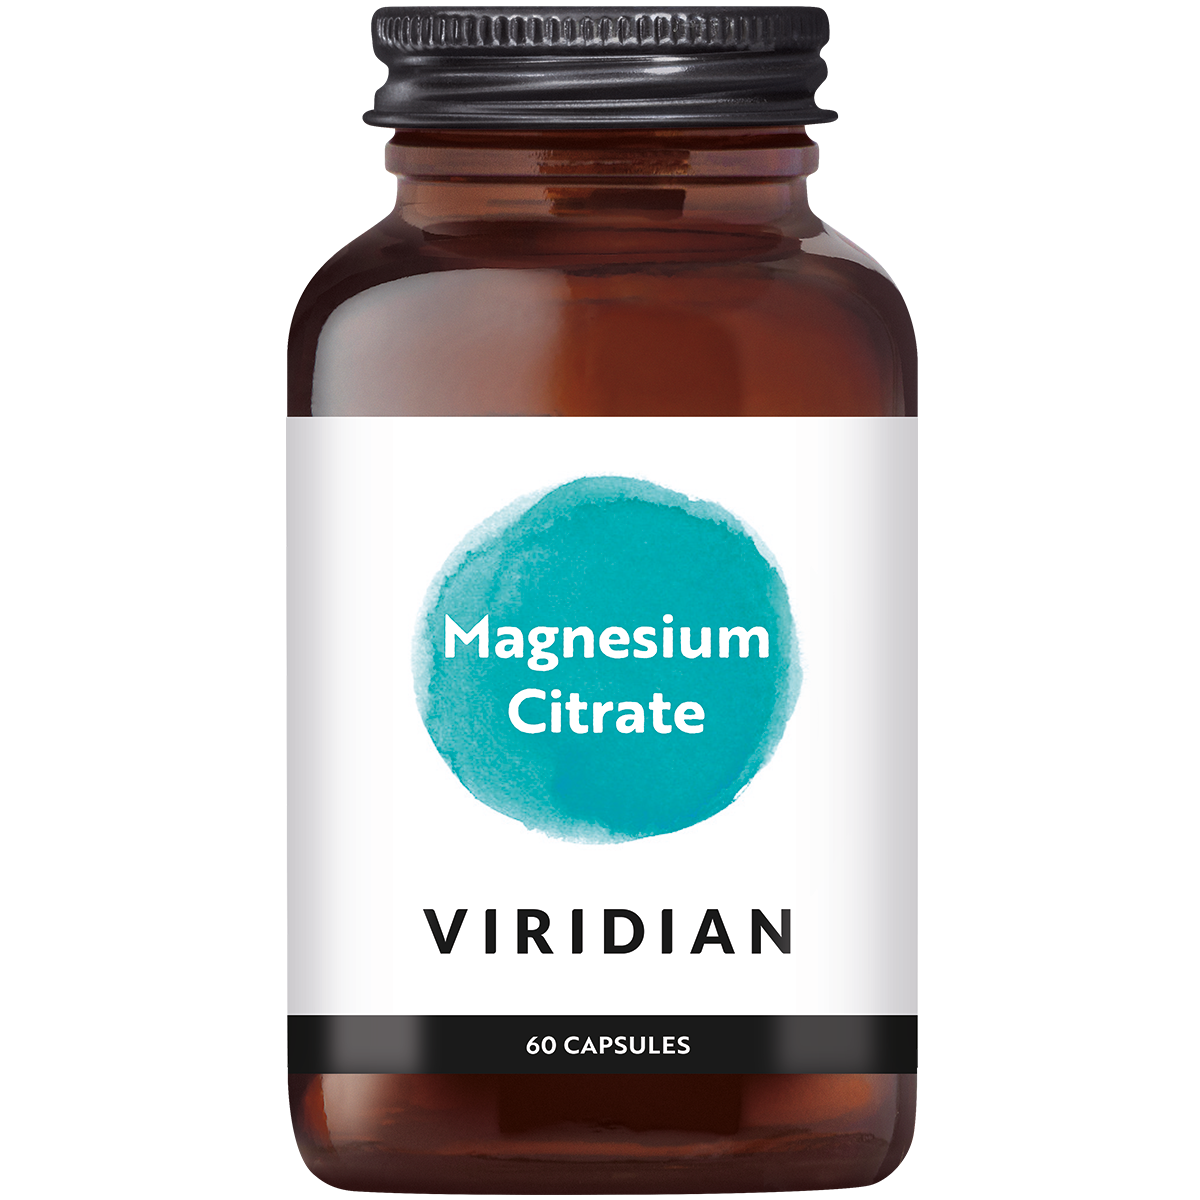 Viridian Magnesium Citrate capsules (60 stuks)